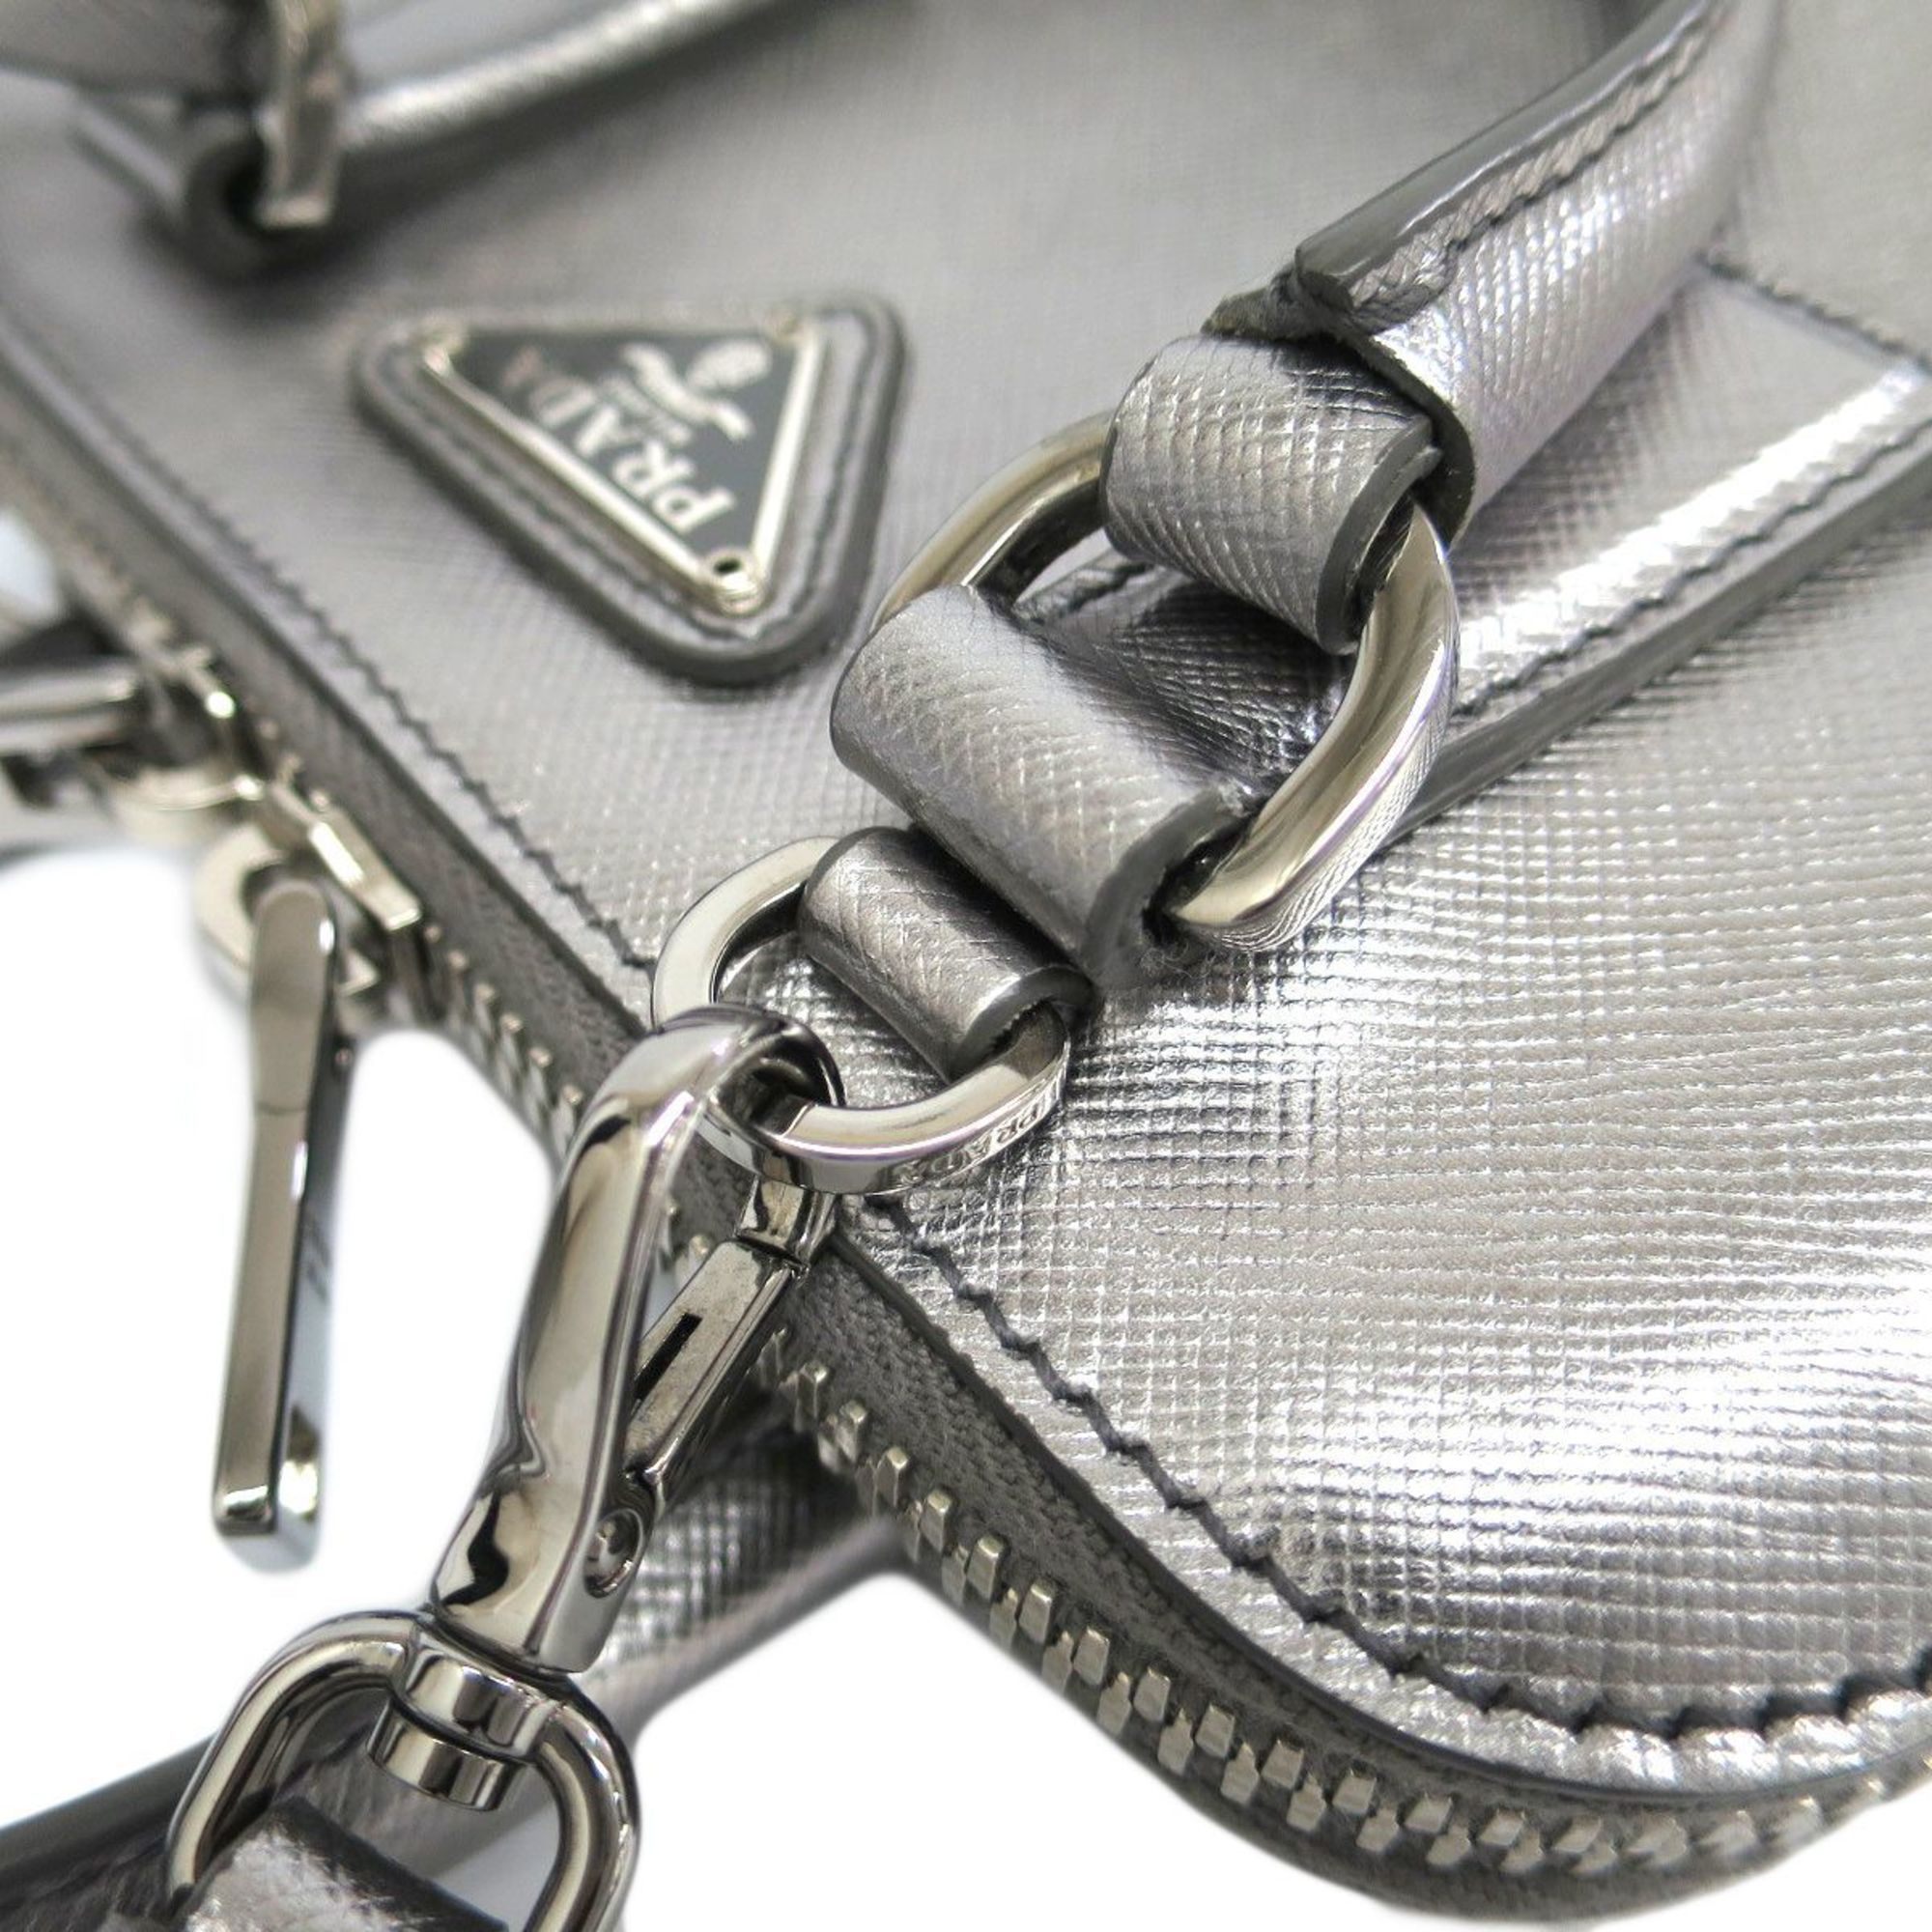 PRADA Hand bag SAFFIANO LUX Leather CROMO BL0851